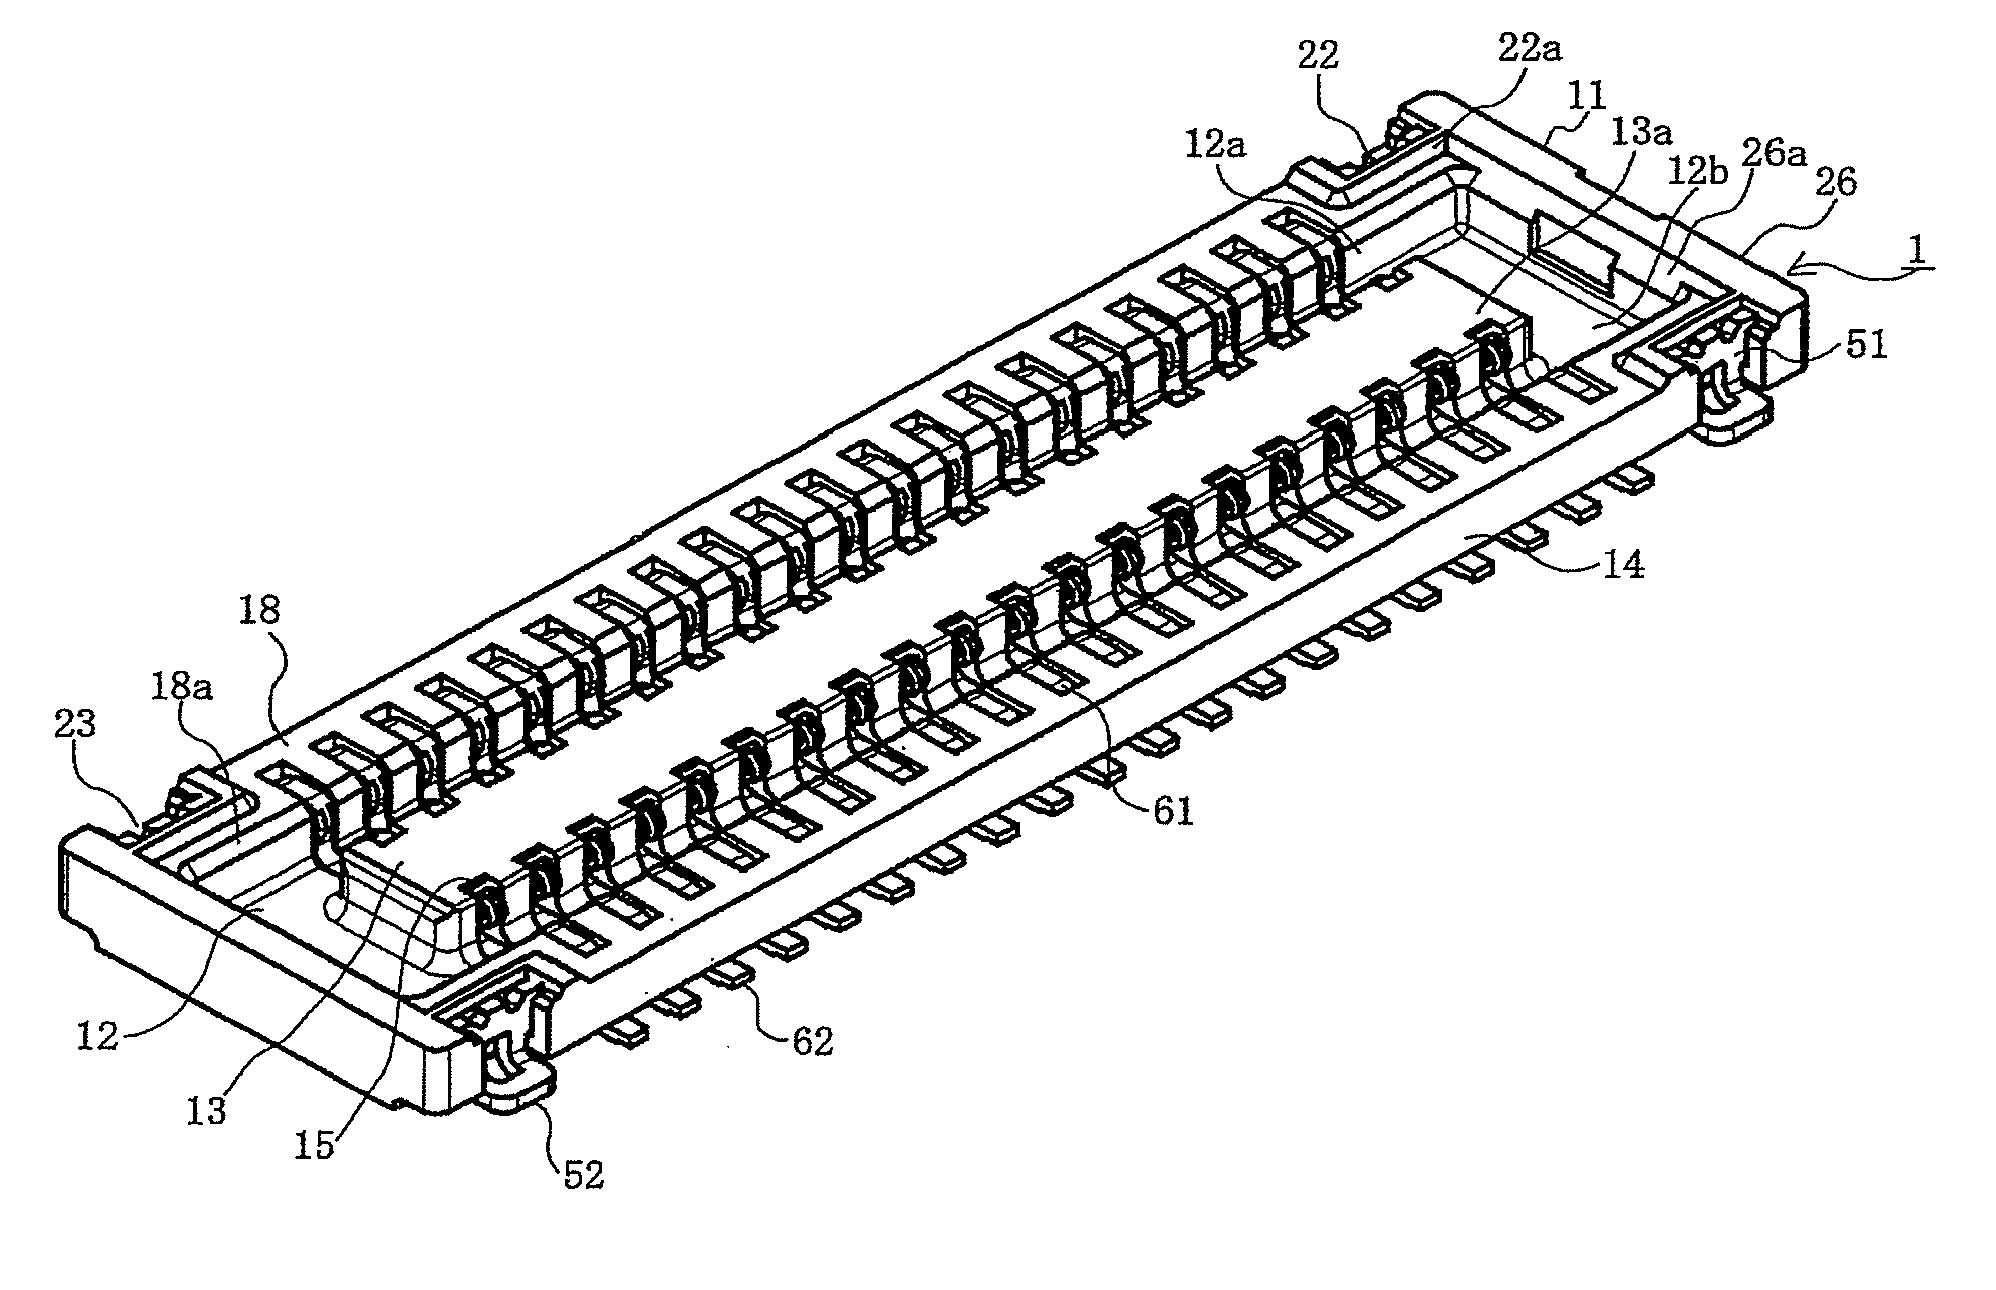 Board-to-board connector